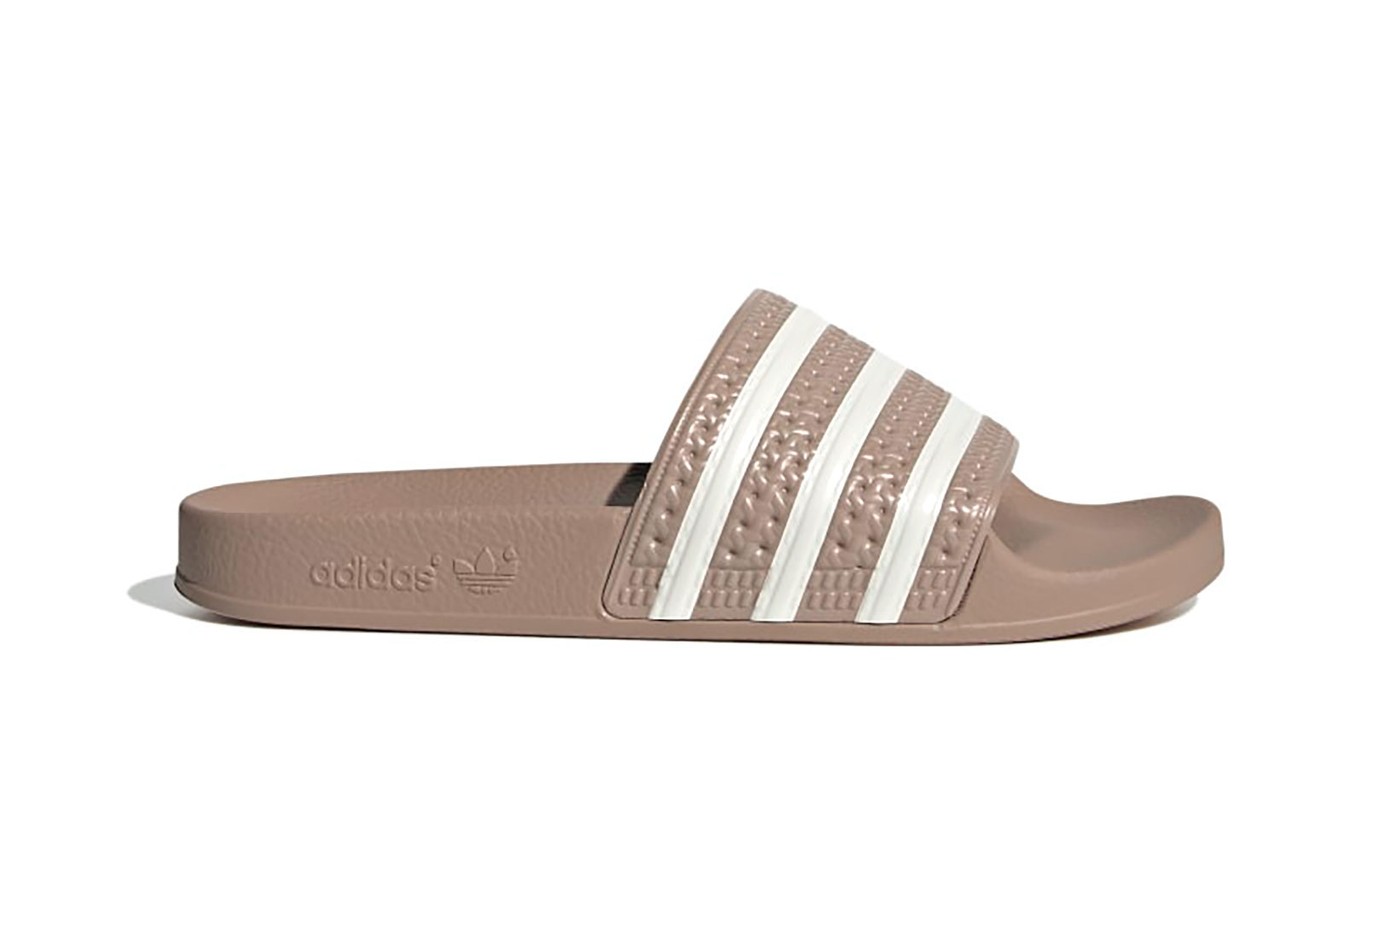 Adidas adilette w slides sandals womens nude brown beige colorway